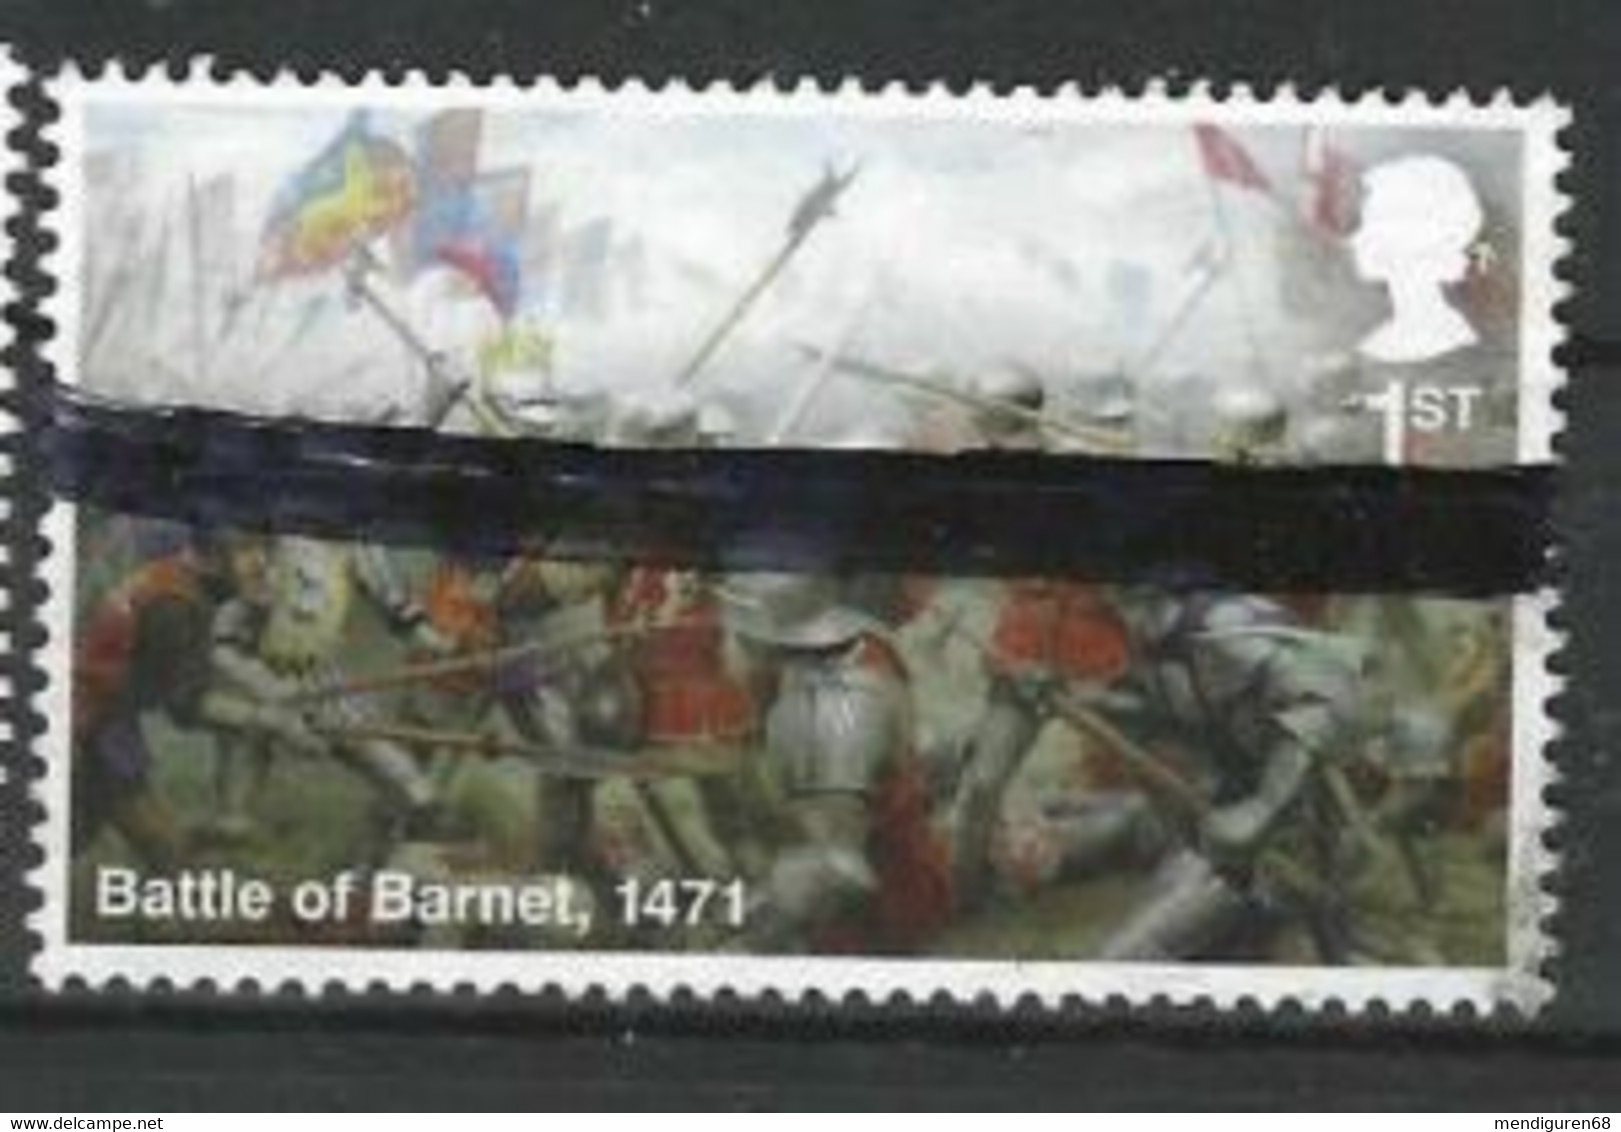 GROSSBRITANNIEN GRANDE BRETAGNE GB 2021 THE WARS OF THE ROSES: Battle Of BARNE 1471 USED SG 451 MI 4761 YT 5175 SC 4101 - Gebraucht